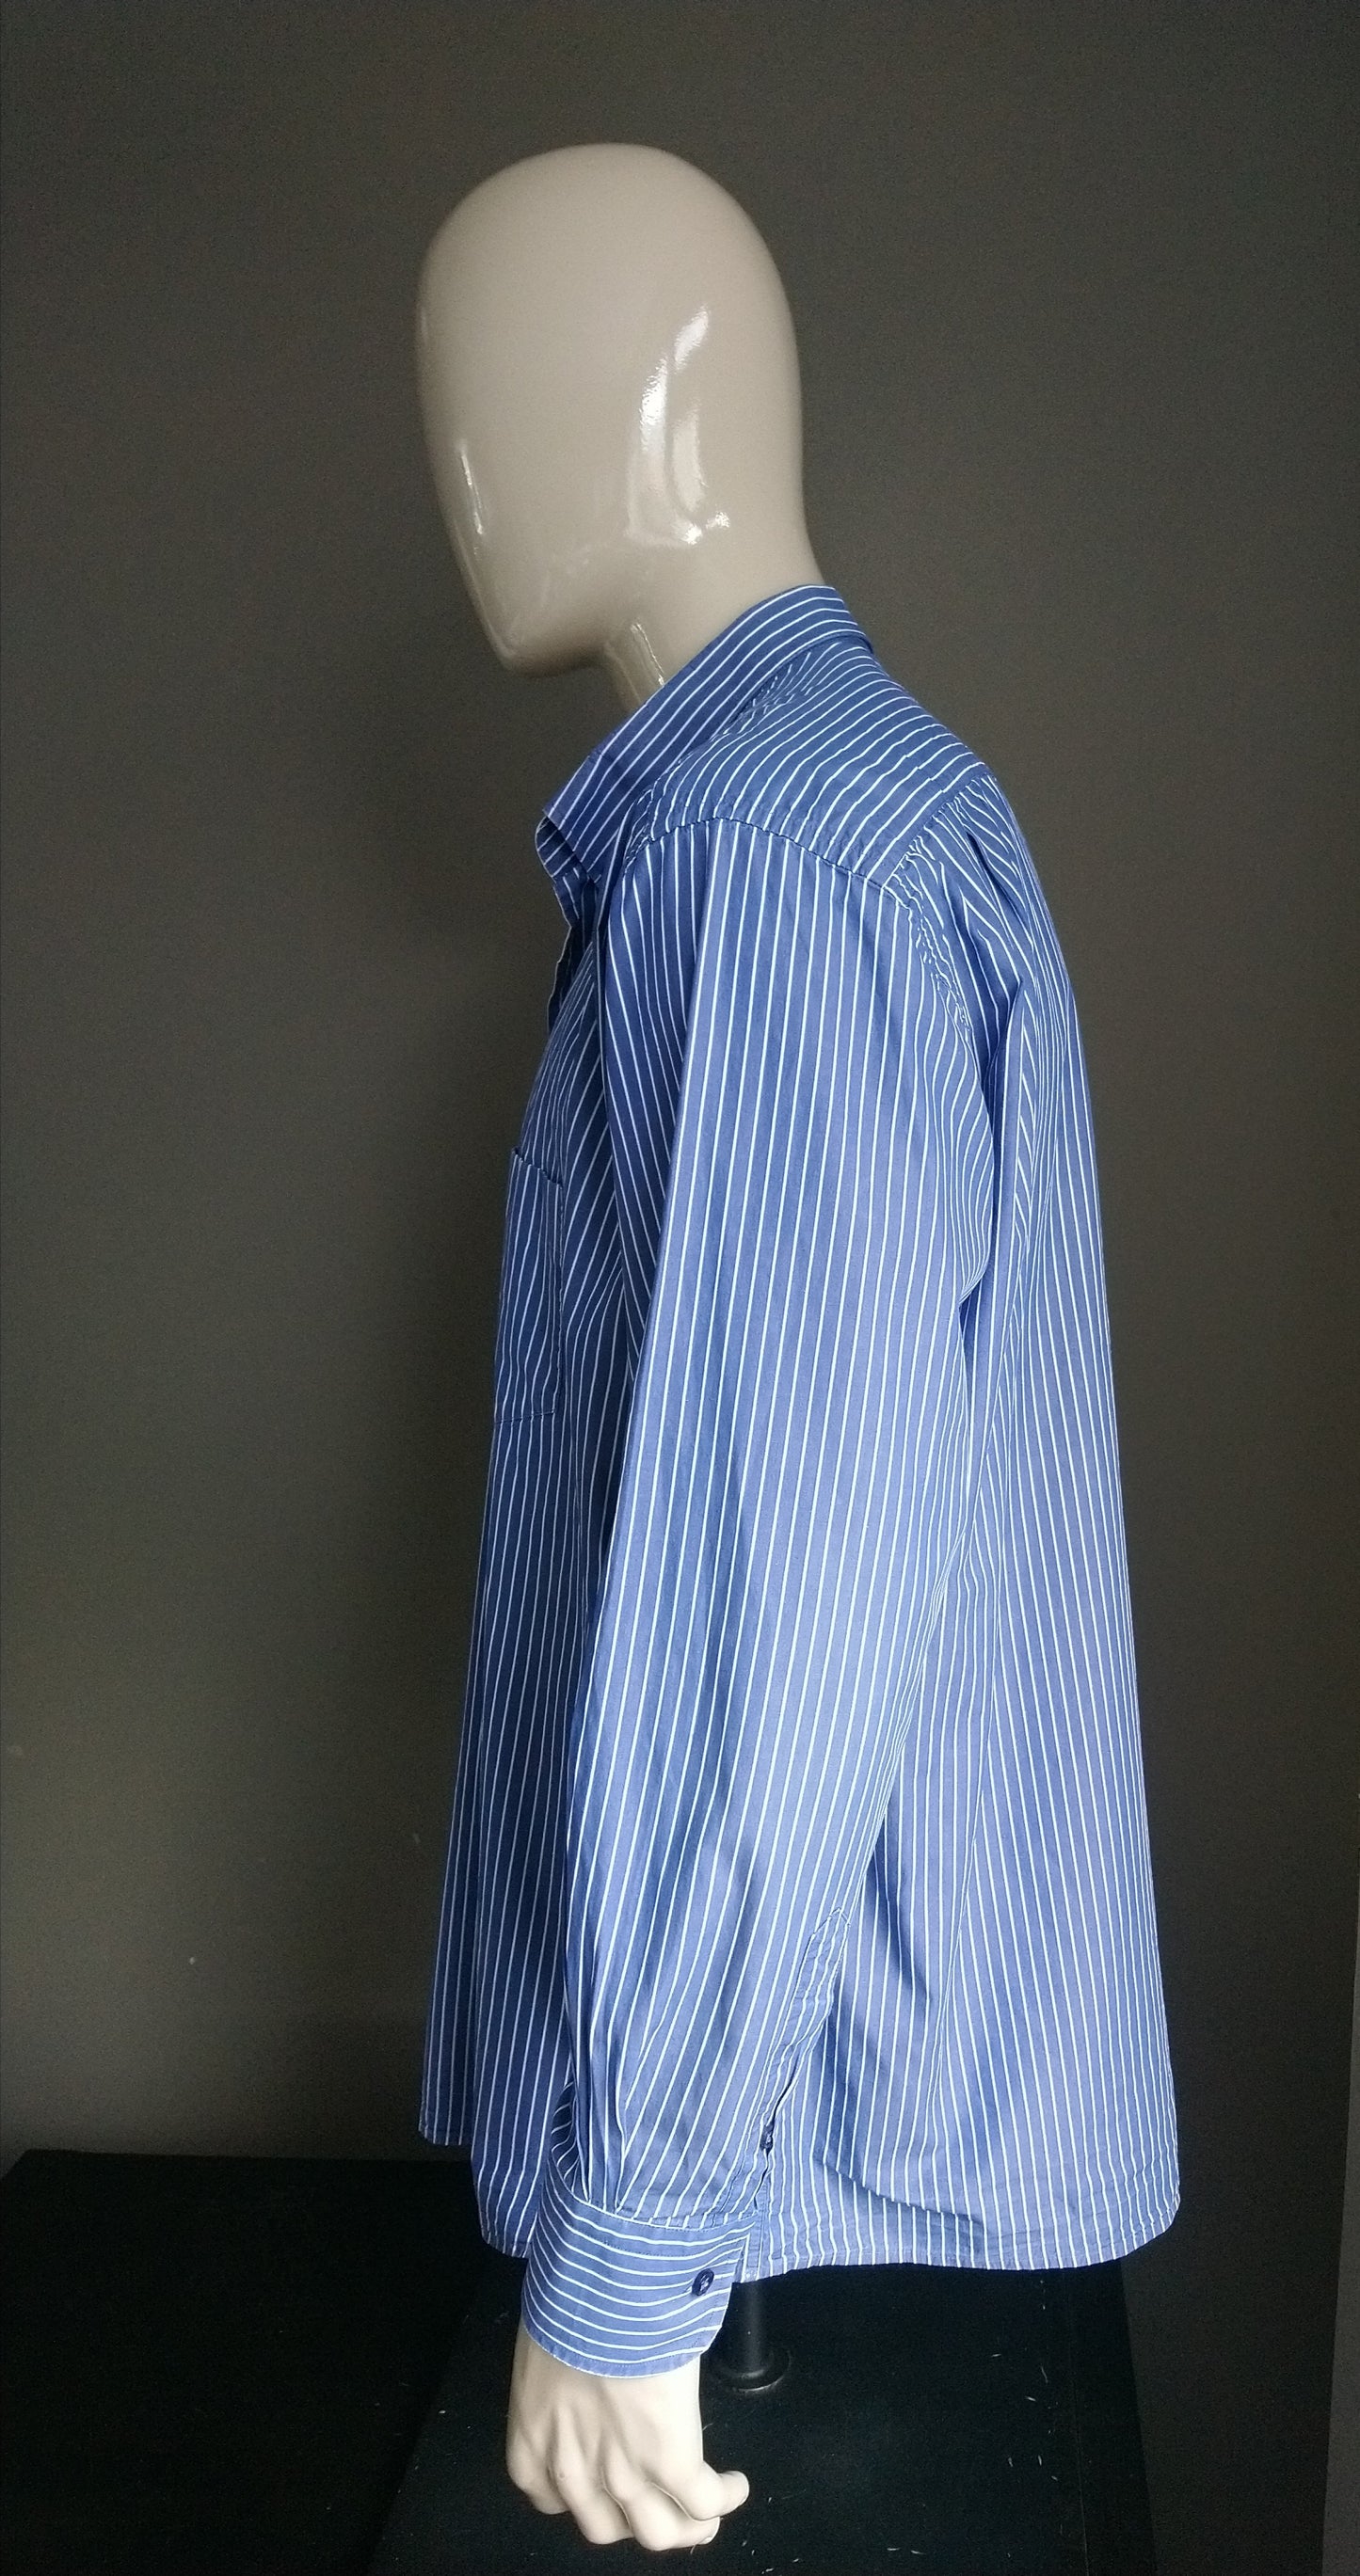 Sailing Comp. camisa. Blanco azul rayado. Tamaño XXXL / 3XL.